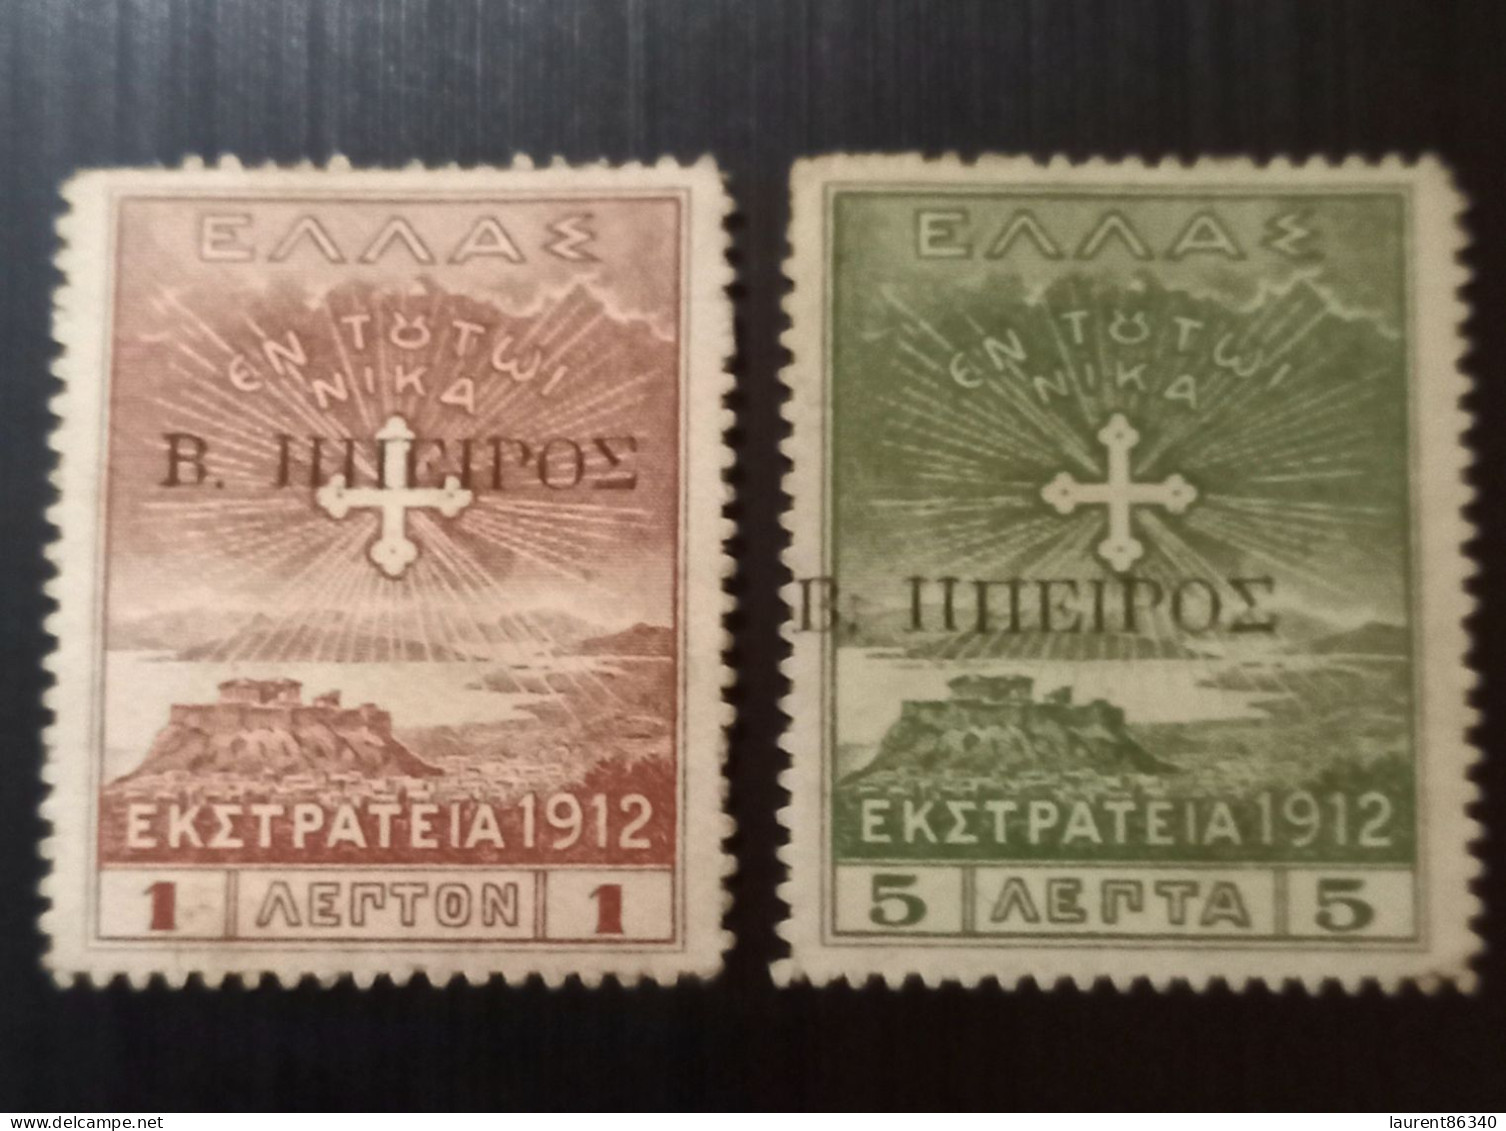 Grèce 1914 Épire Du Nord Occupation Surcharge " Β. ΗΠΕΙΡΟΣ "1915 Greek Postage Stamps Of 1913 Overprinted "B. HΠΕΙΡΟΣ - Nordepirus